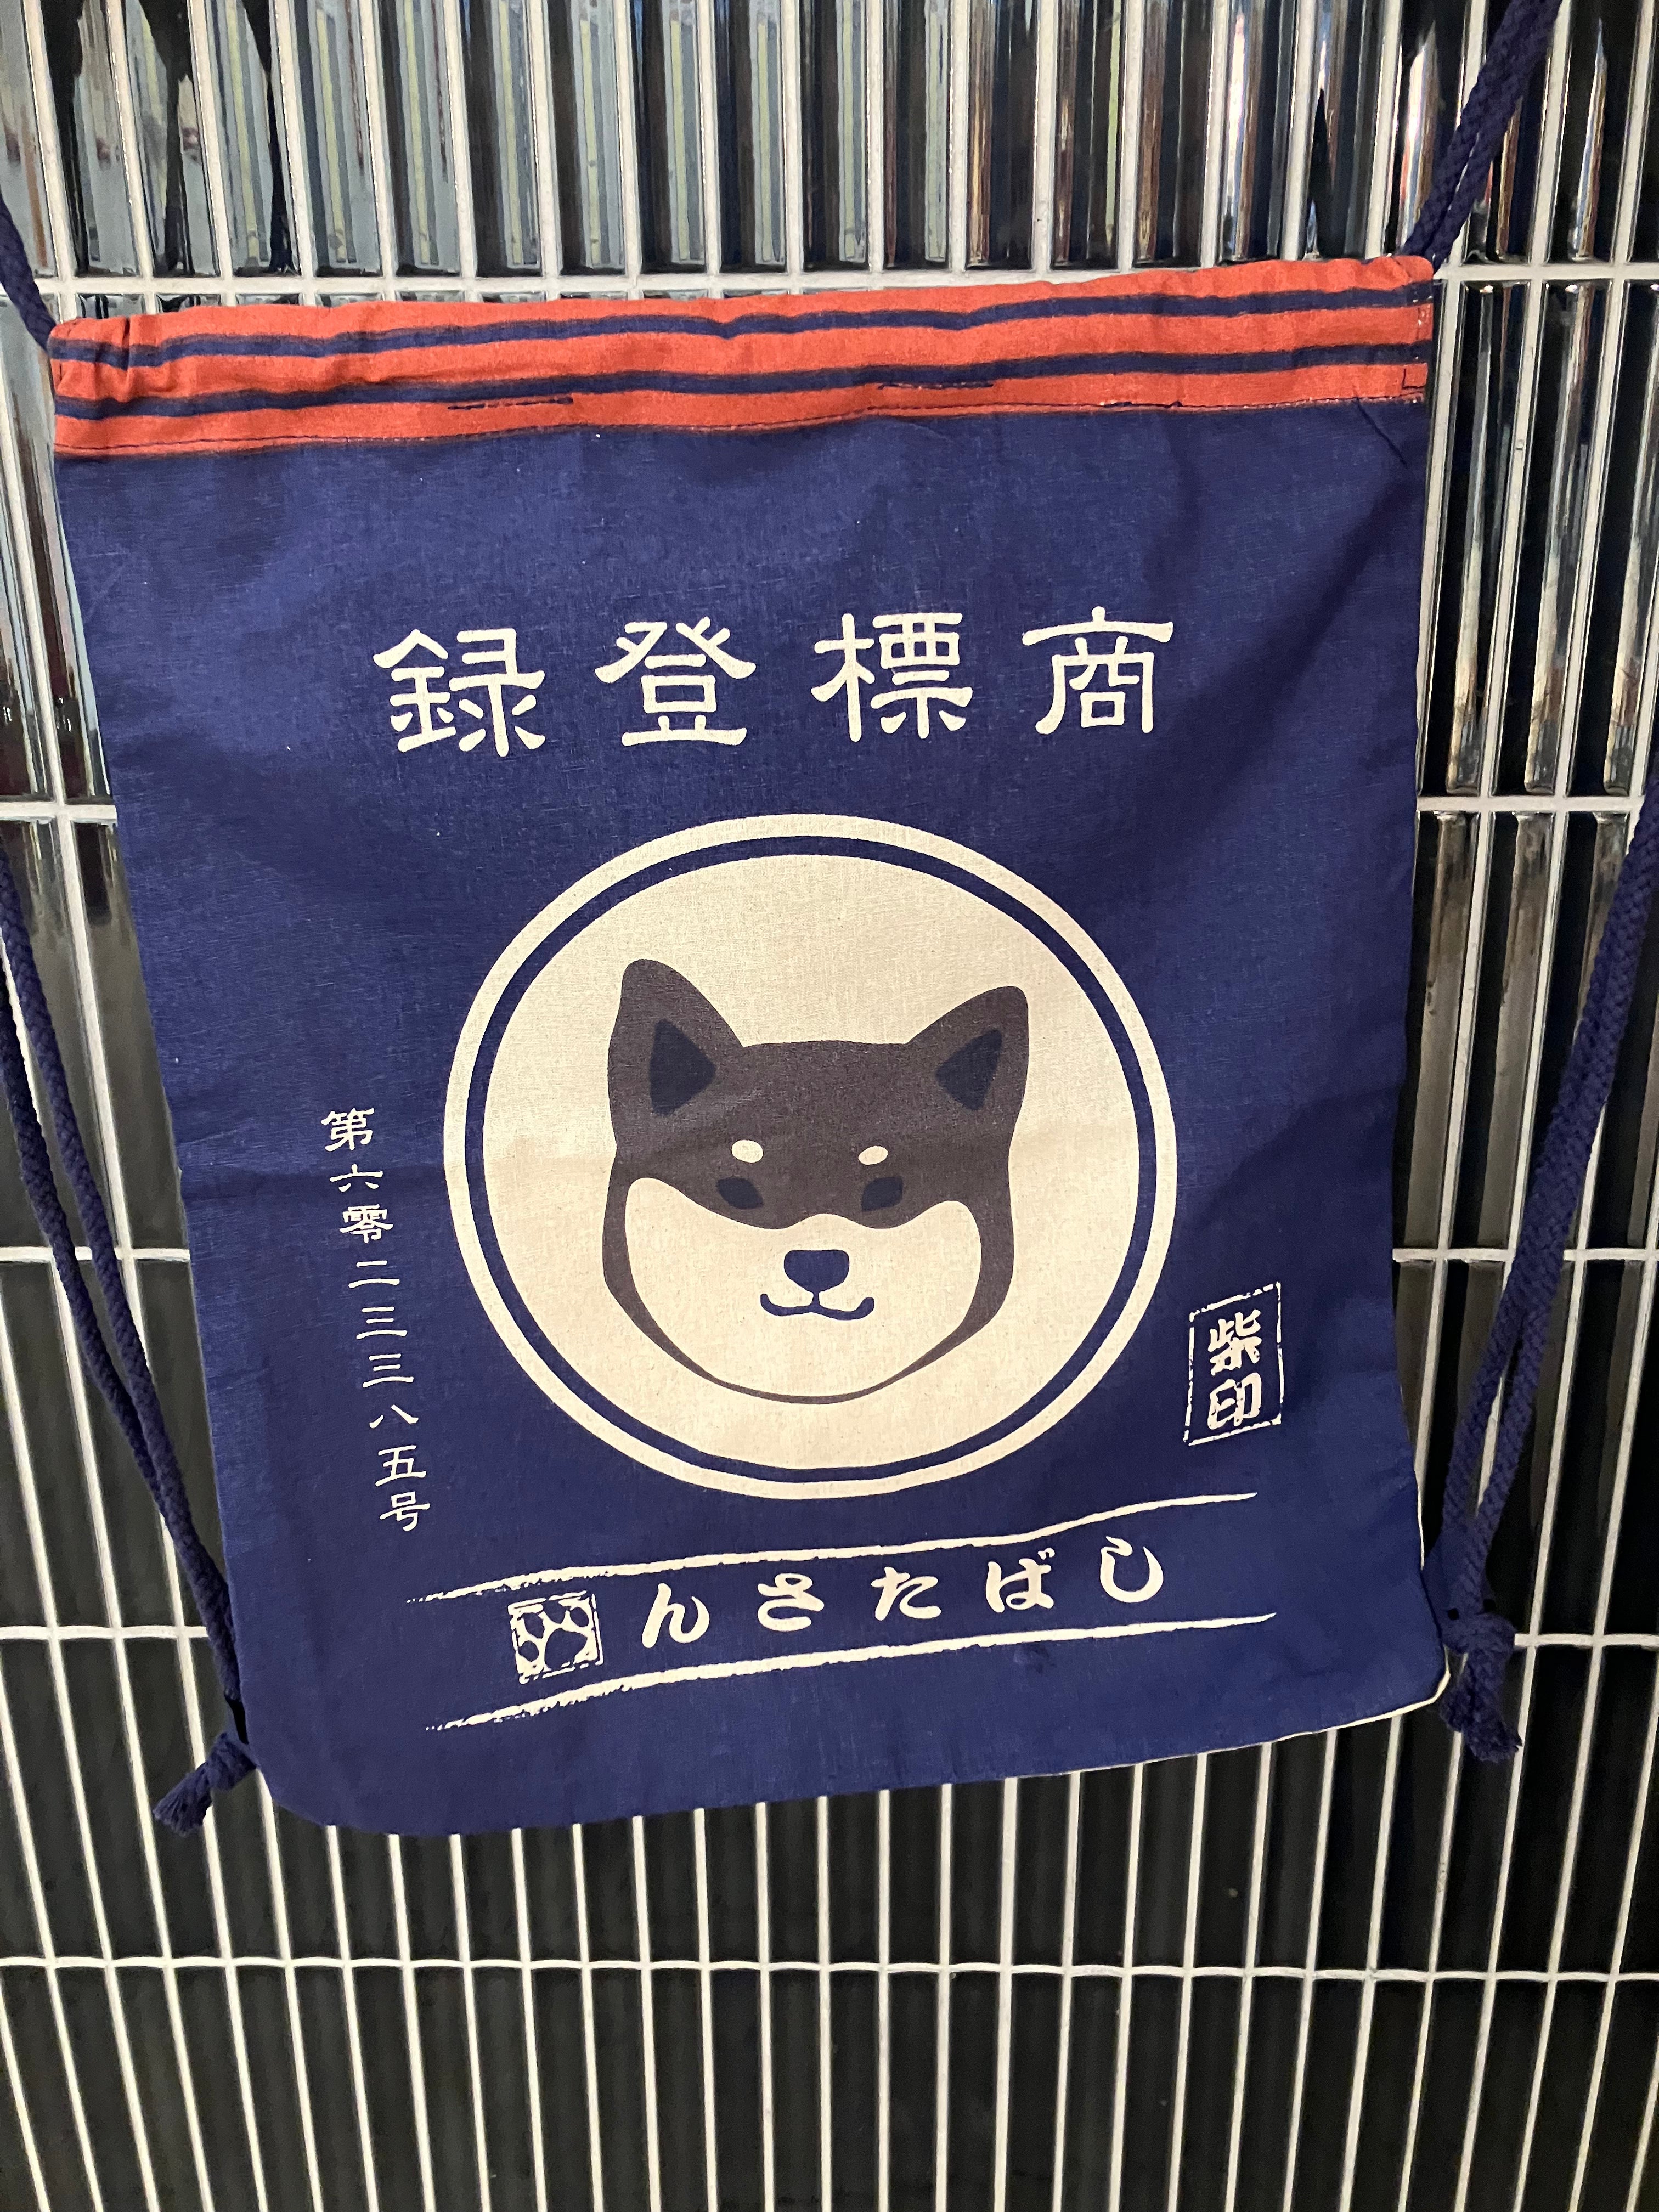 Japanese Tote bag/backpack with Shiba